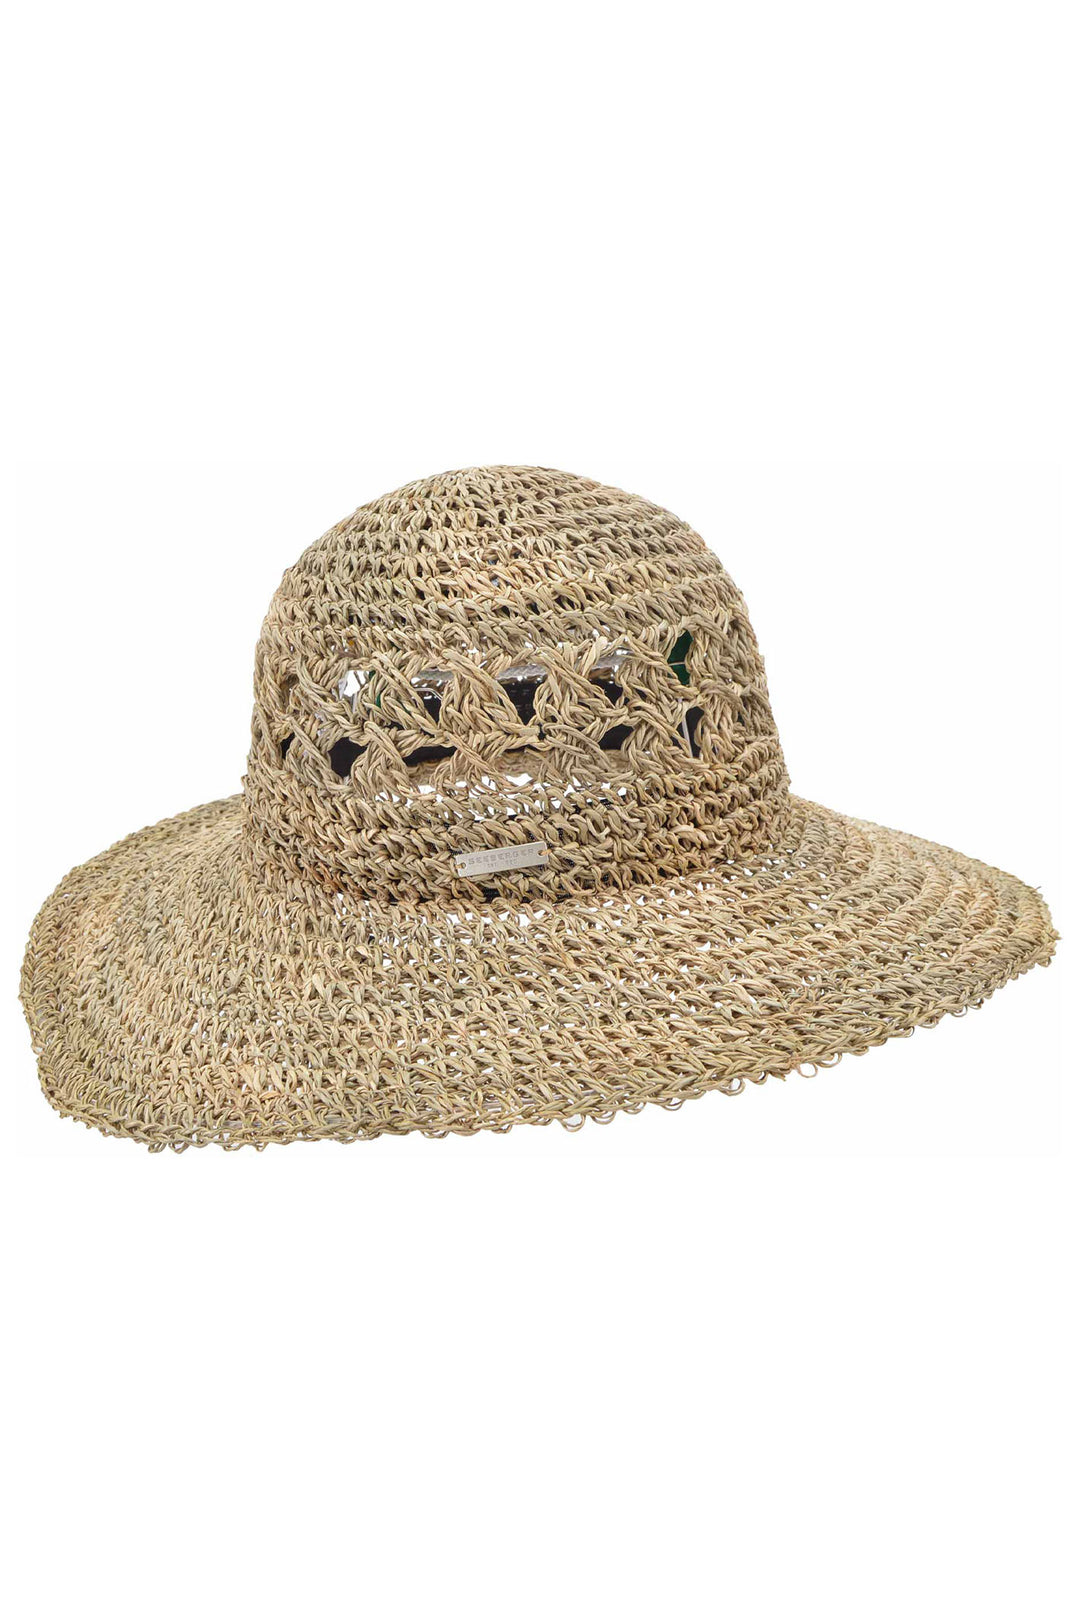 Seeberger 055464-00000 Natural Seagras Crochet Floppy Summer Hat